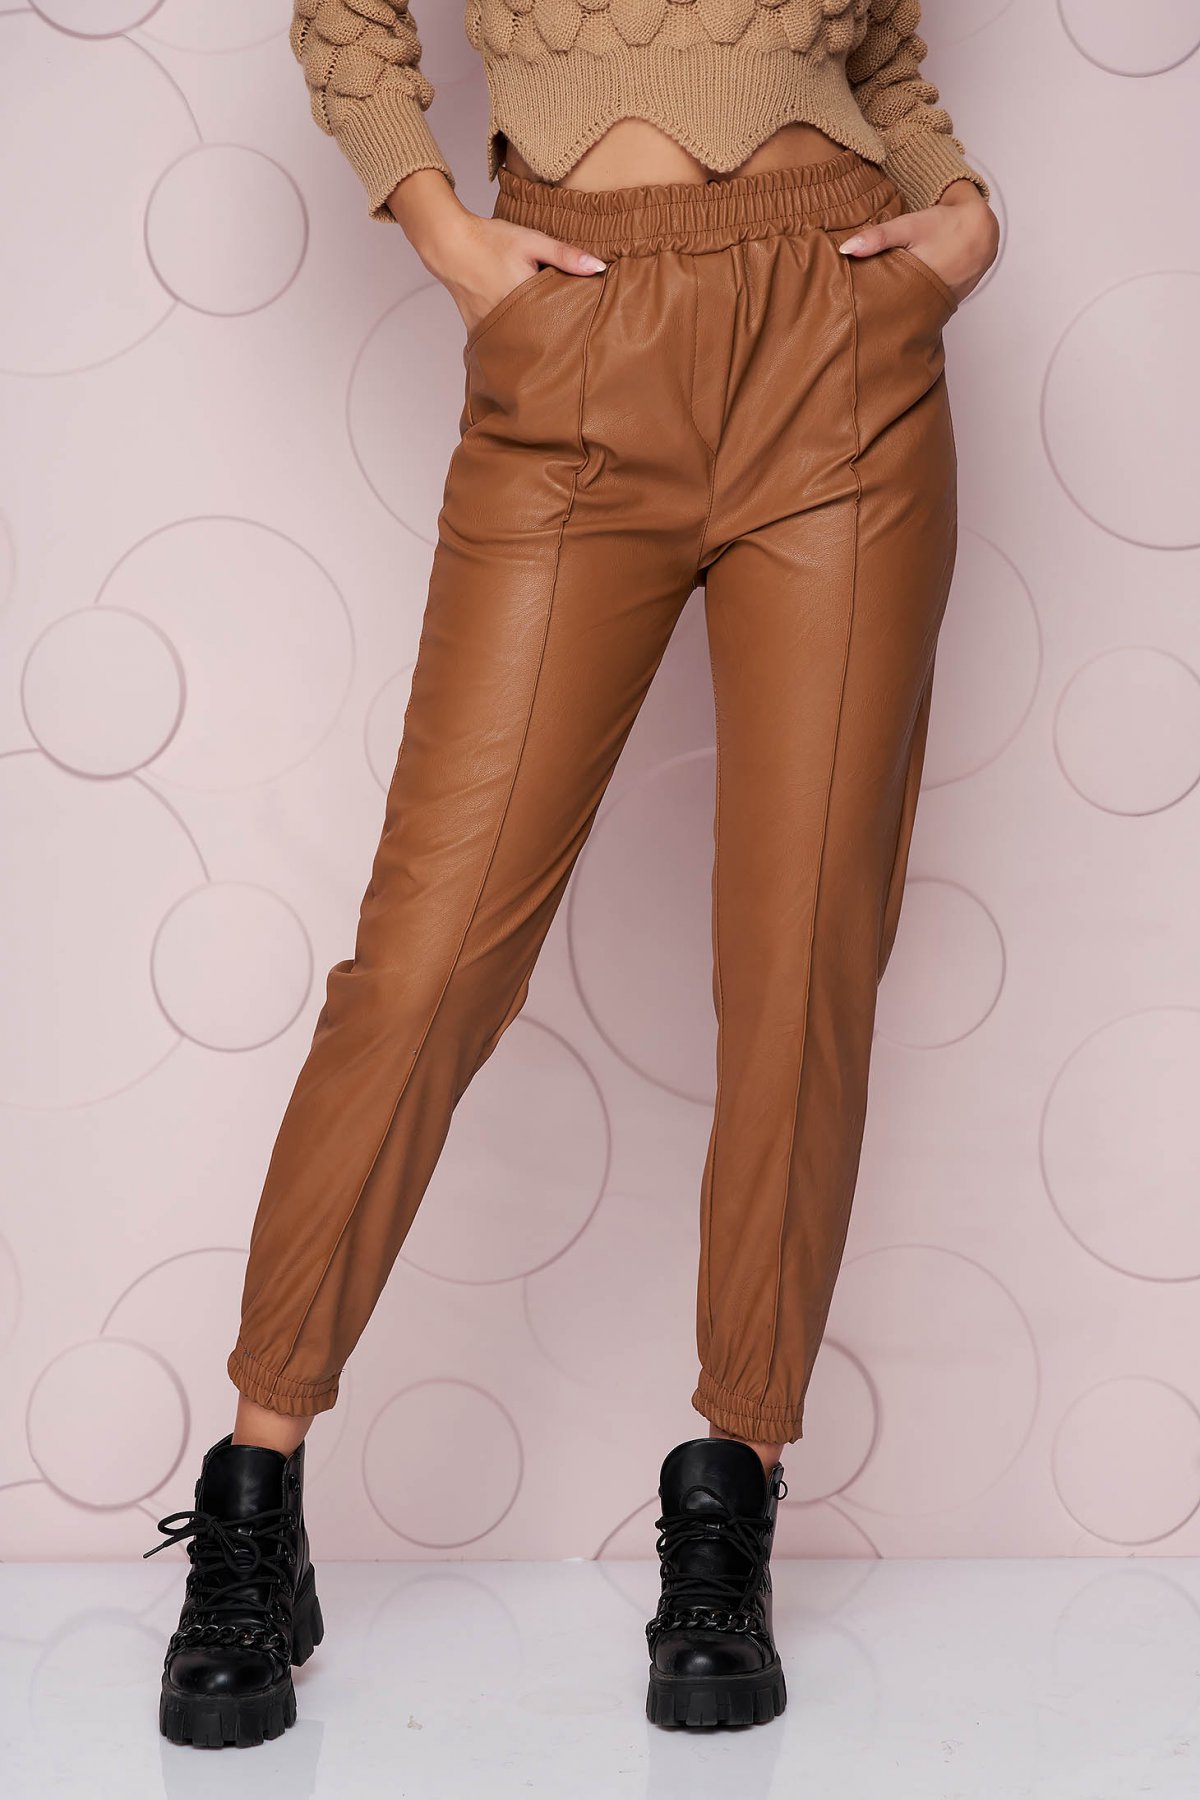 Pantaloni SunShine maro lungi cu croi larg si talie normala din material din piele ecologica elastica si buzunare laterale starshiners.ro imagine noua